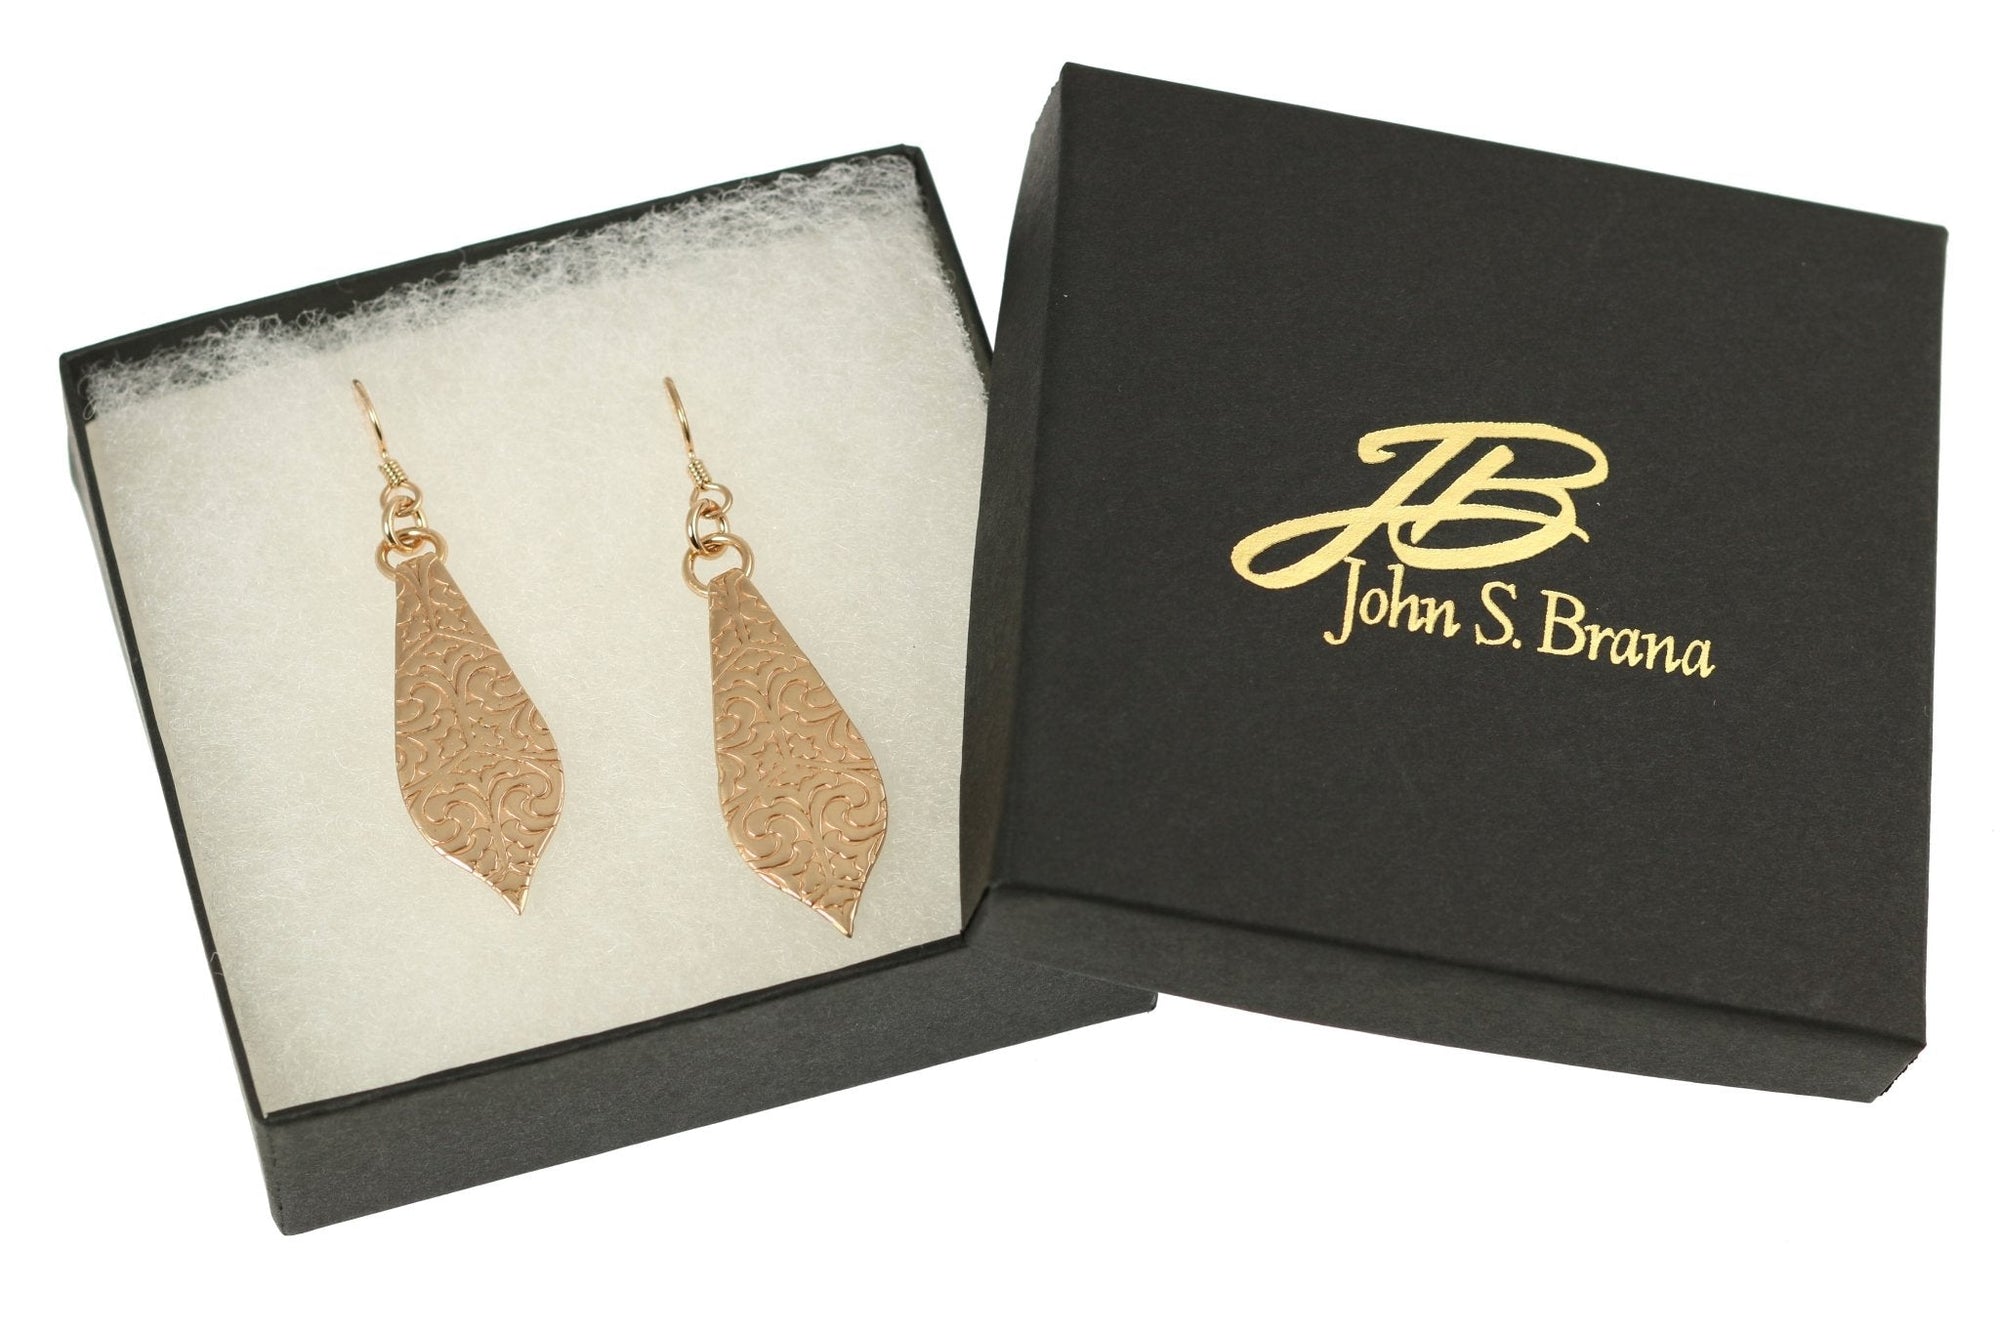 Damask Embossed Bronze Marrakesh Drop Earrings in Gift Box